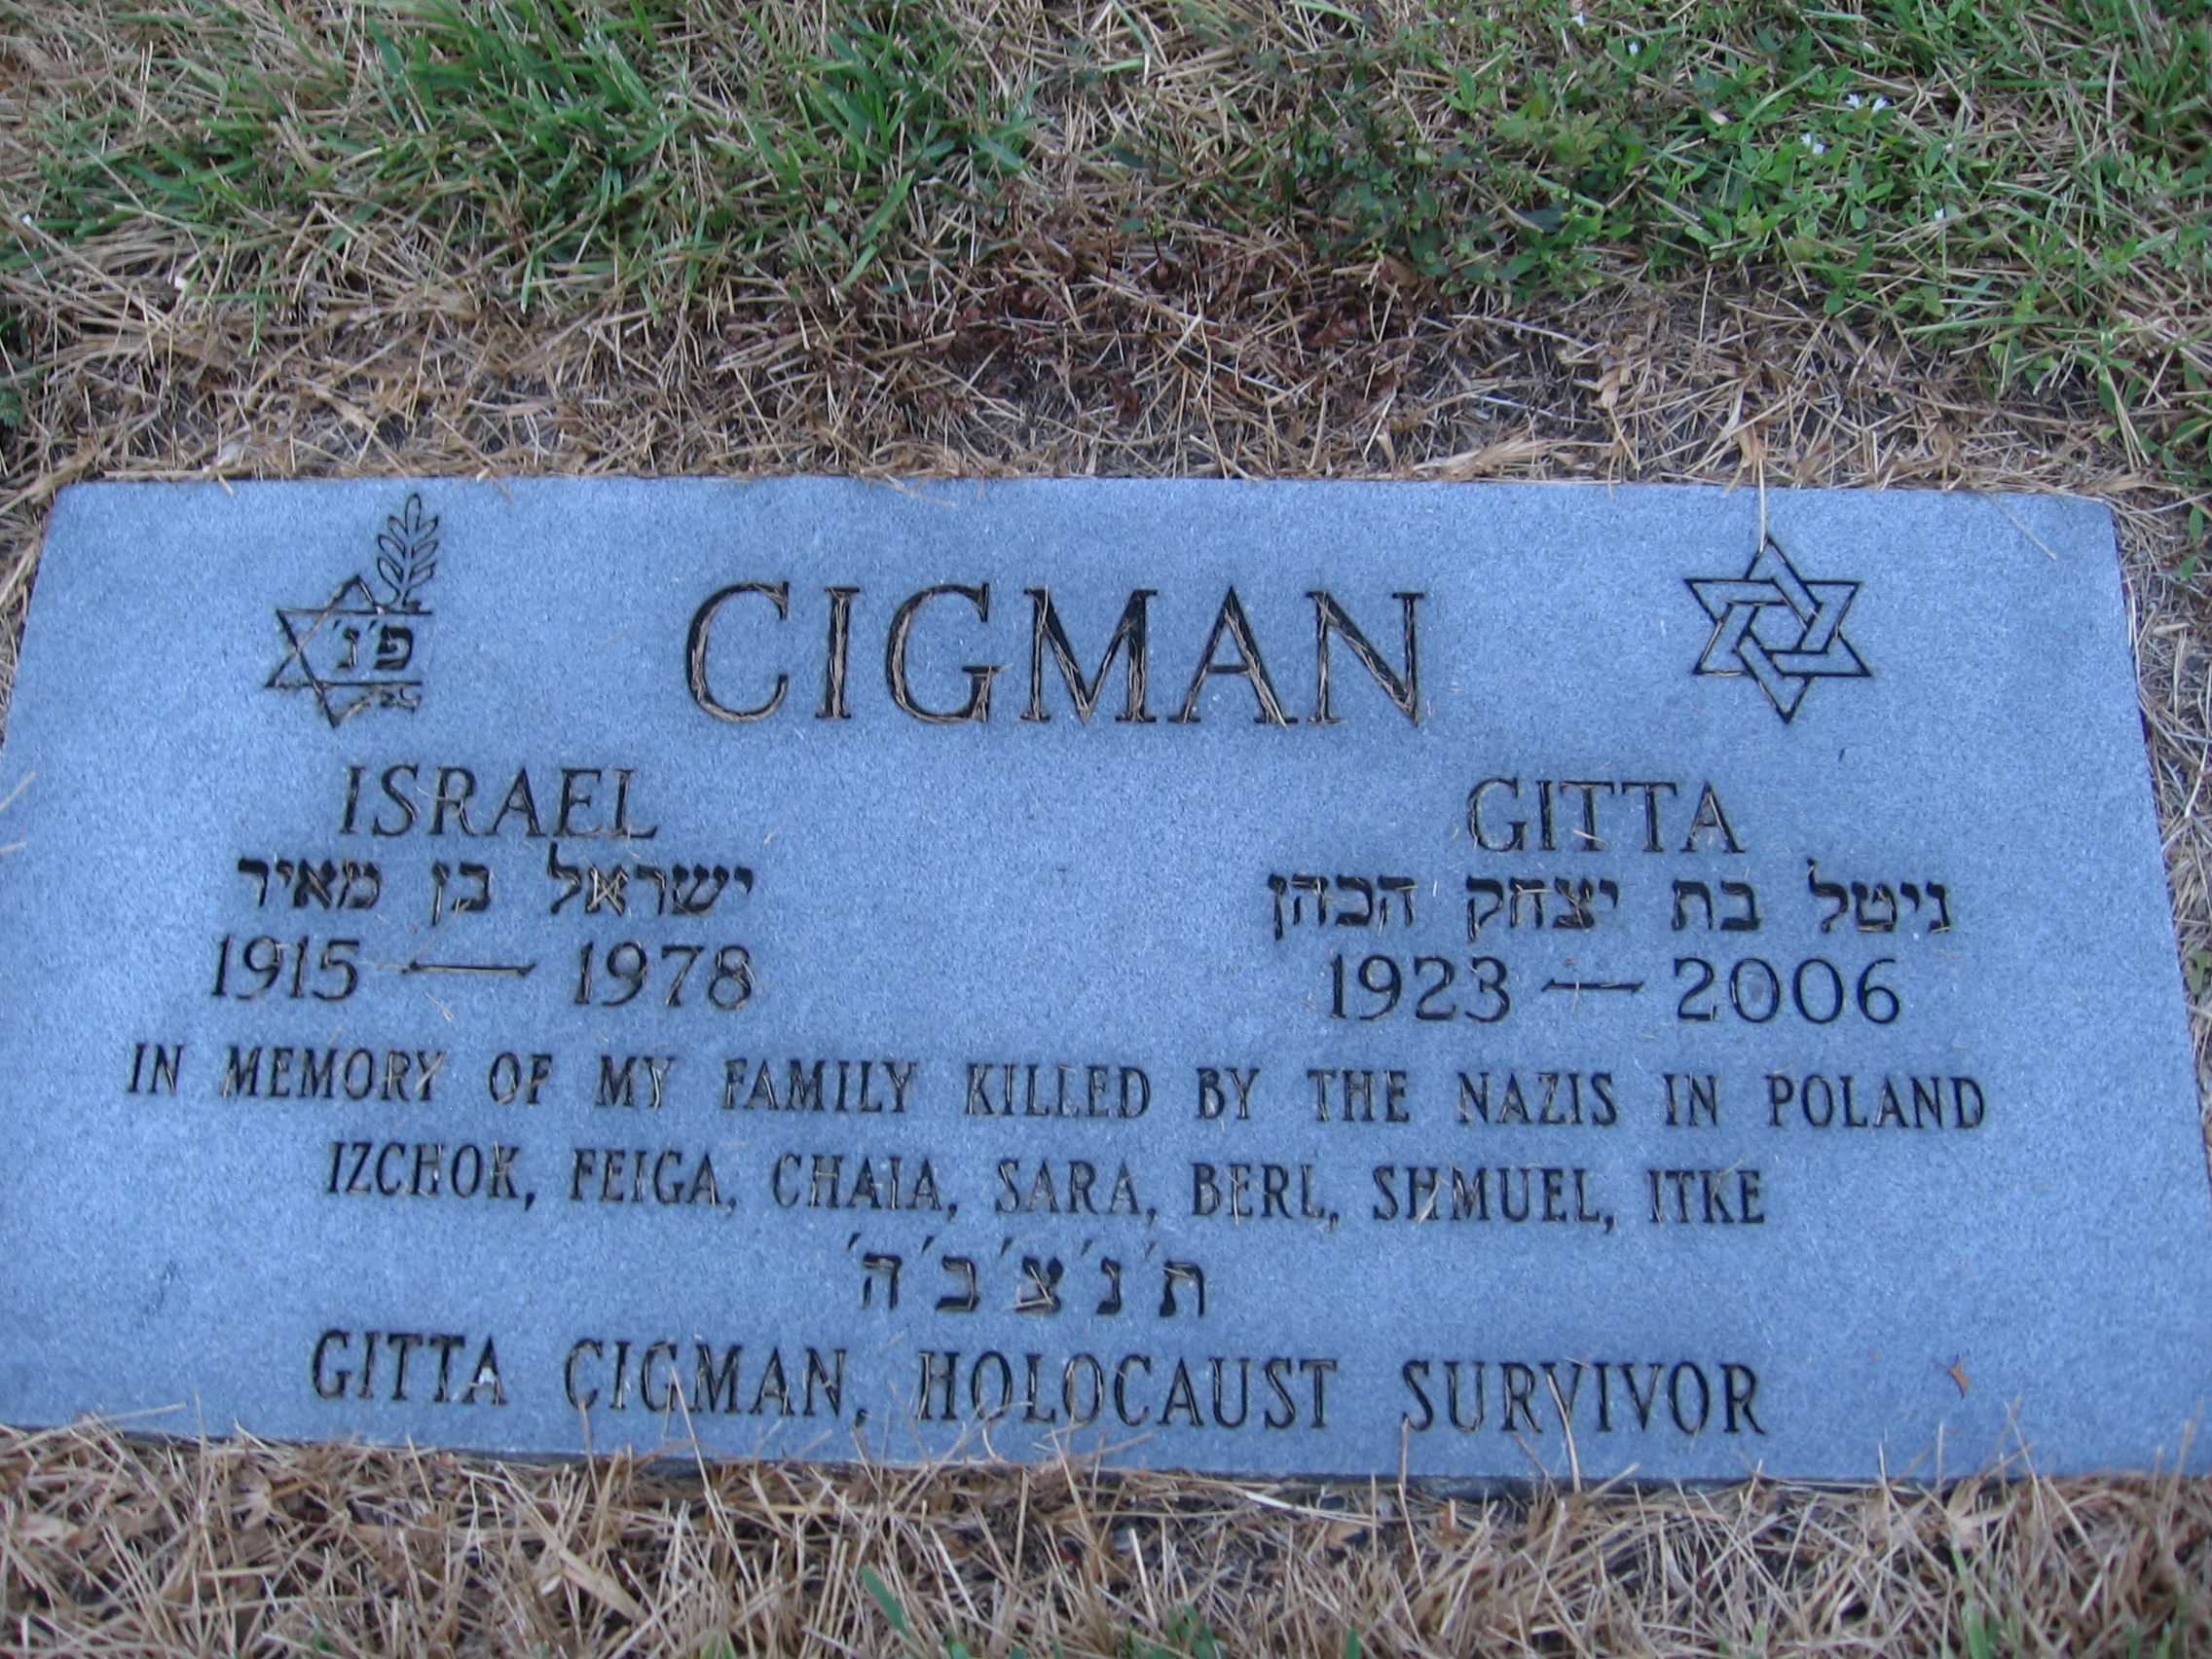 Israel Cigman